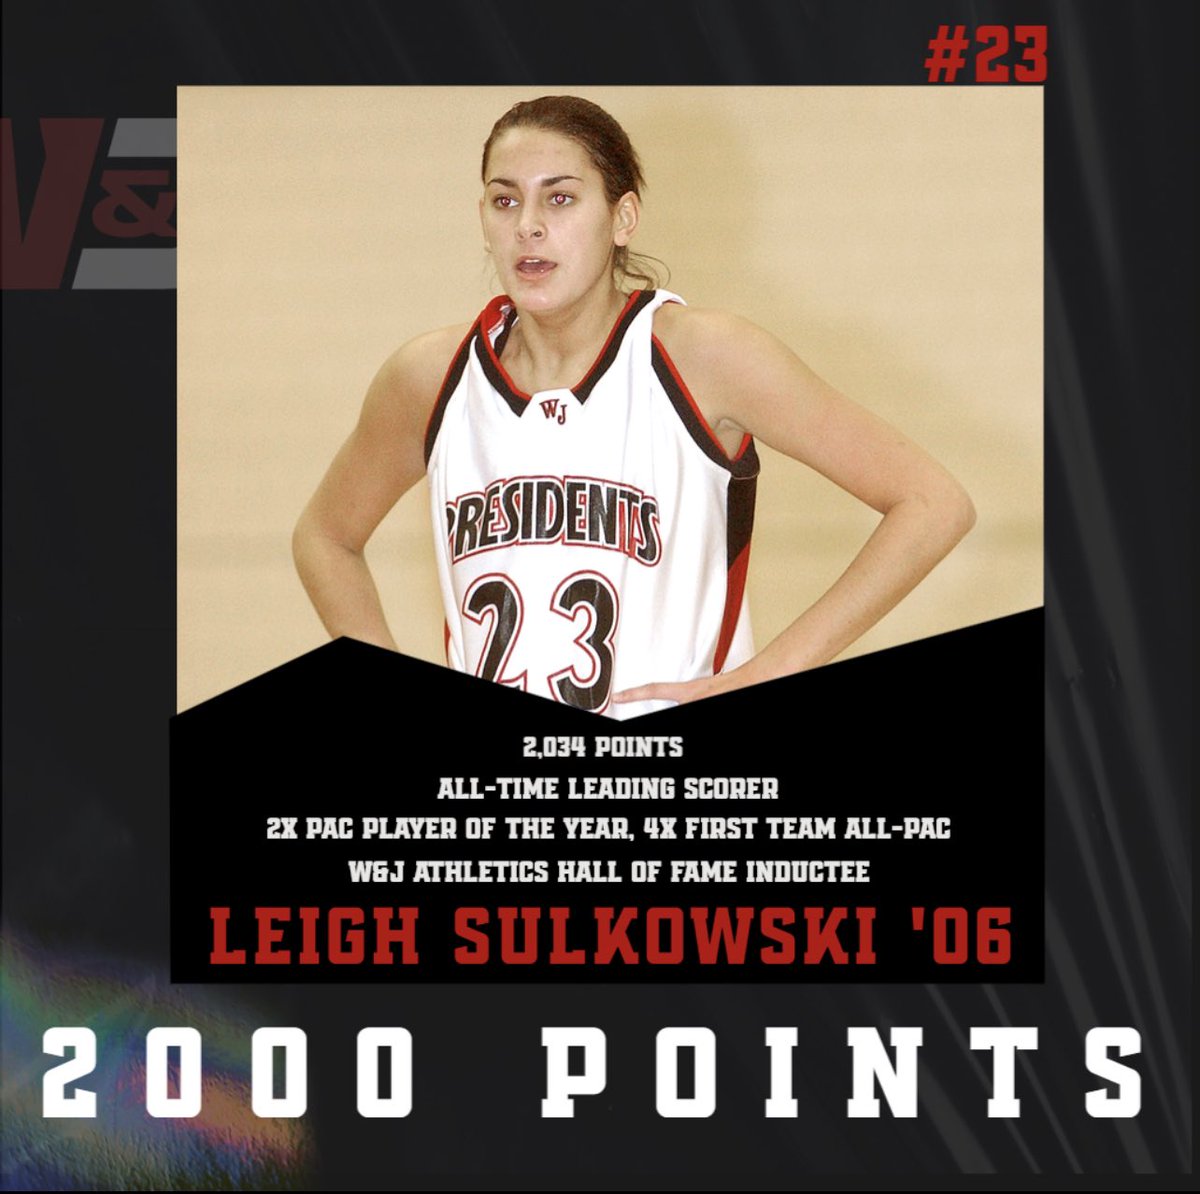 Shout out to Leigh Sulkowski for scoring 2,034 points!!! #1000points #alumni #prezpride